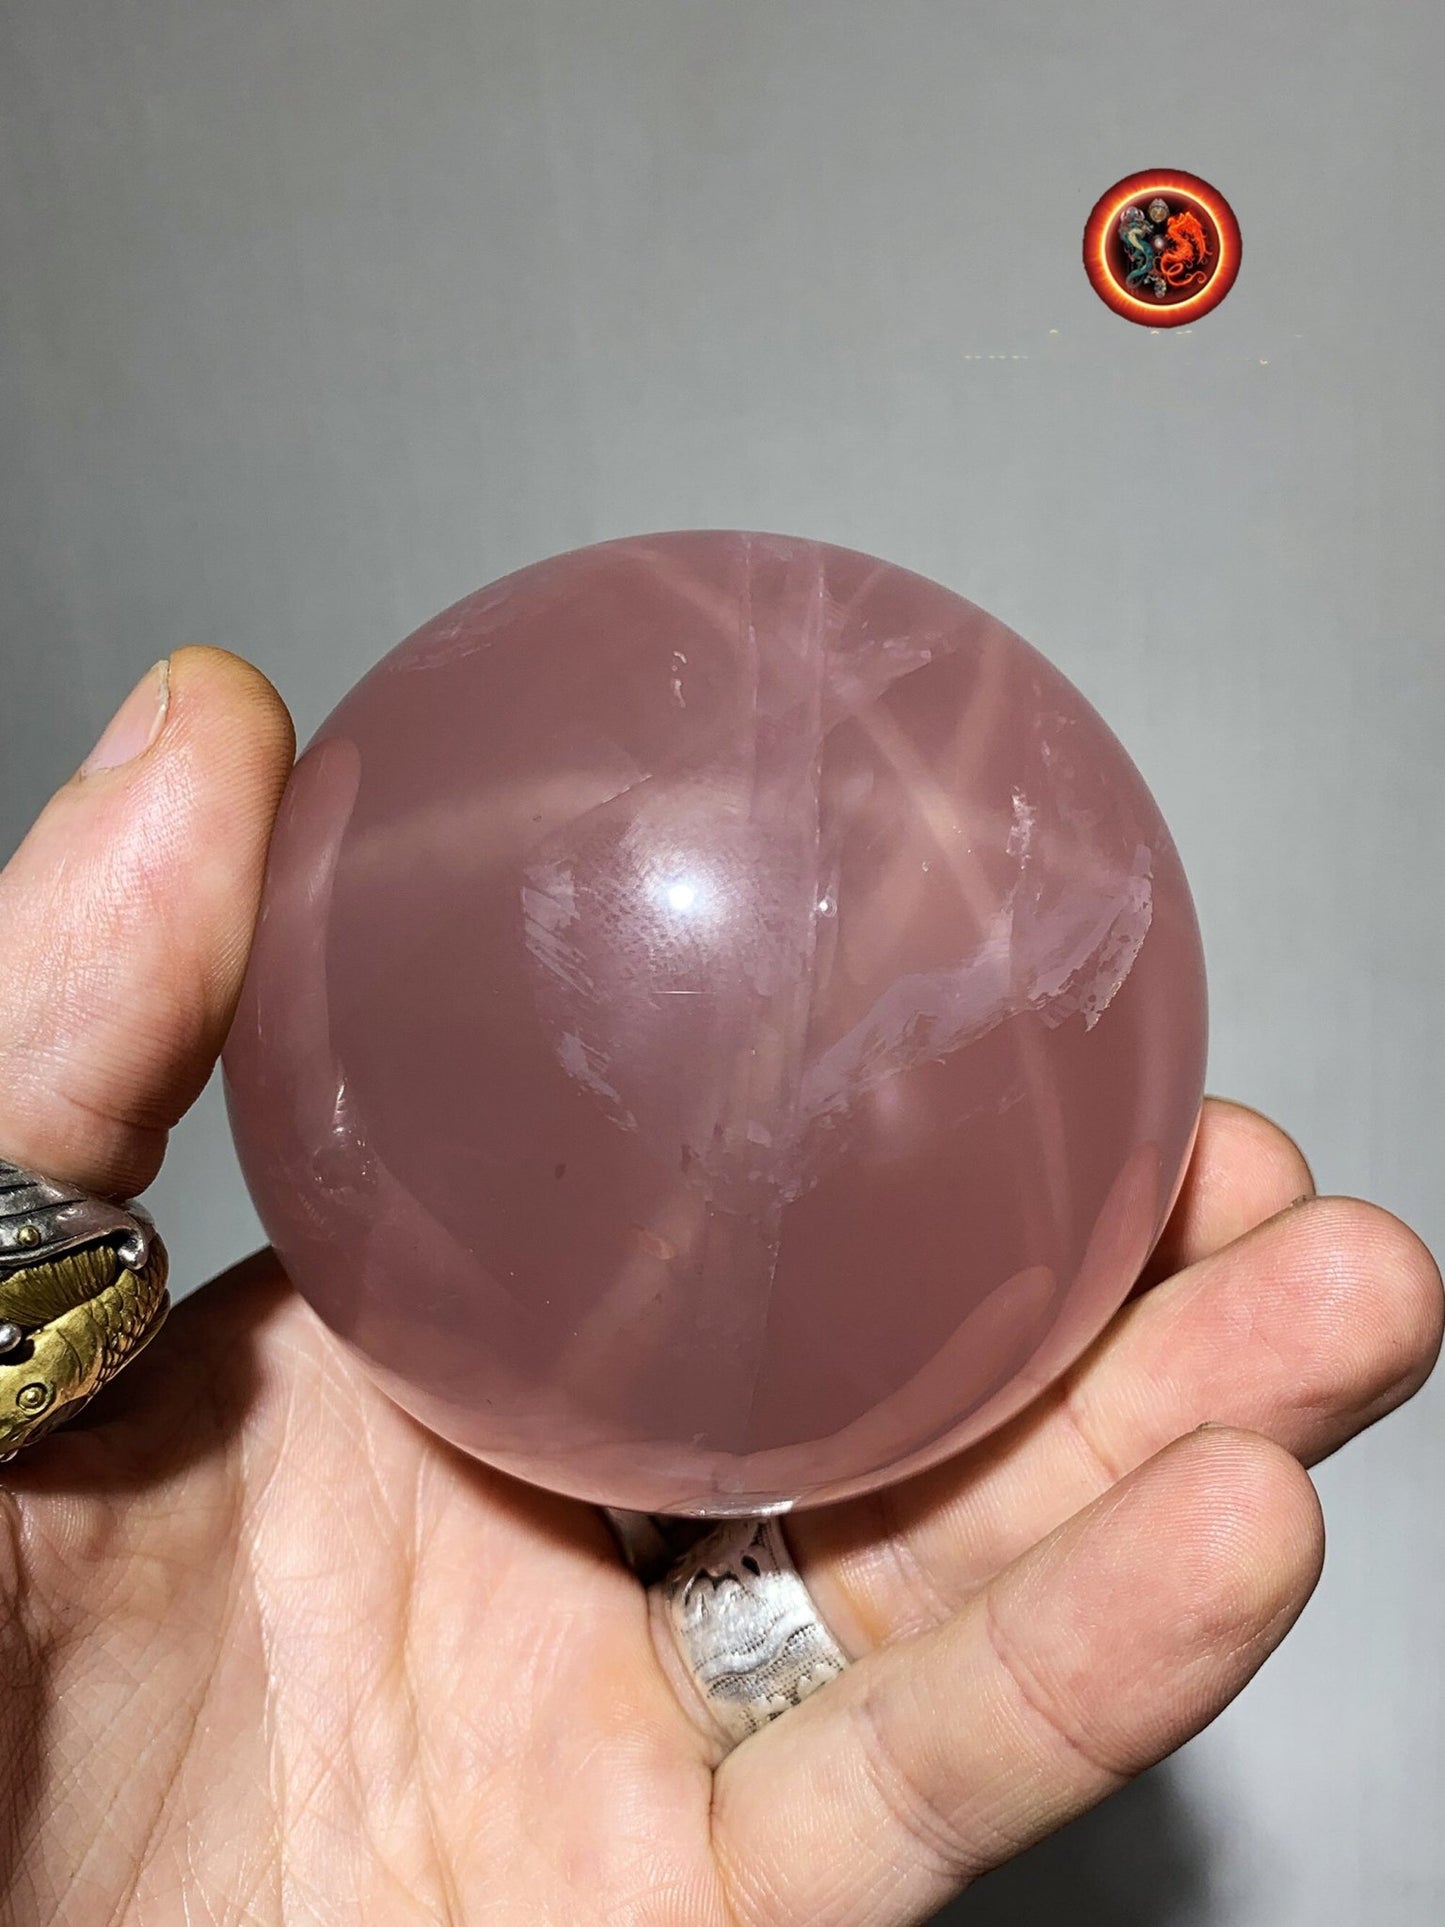 Sphère, quartz rose étoilé, quartz rose astérié ou quartz rose astérisé. Provenance du Mozambique. quartz rose naturel. 77mm de diamètre - obsidian dragon